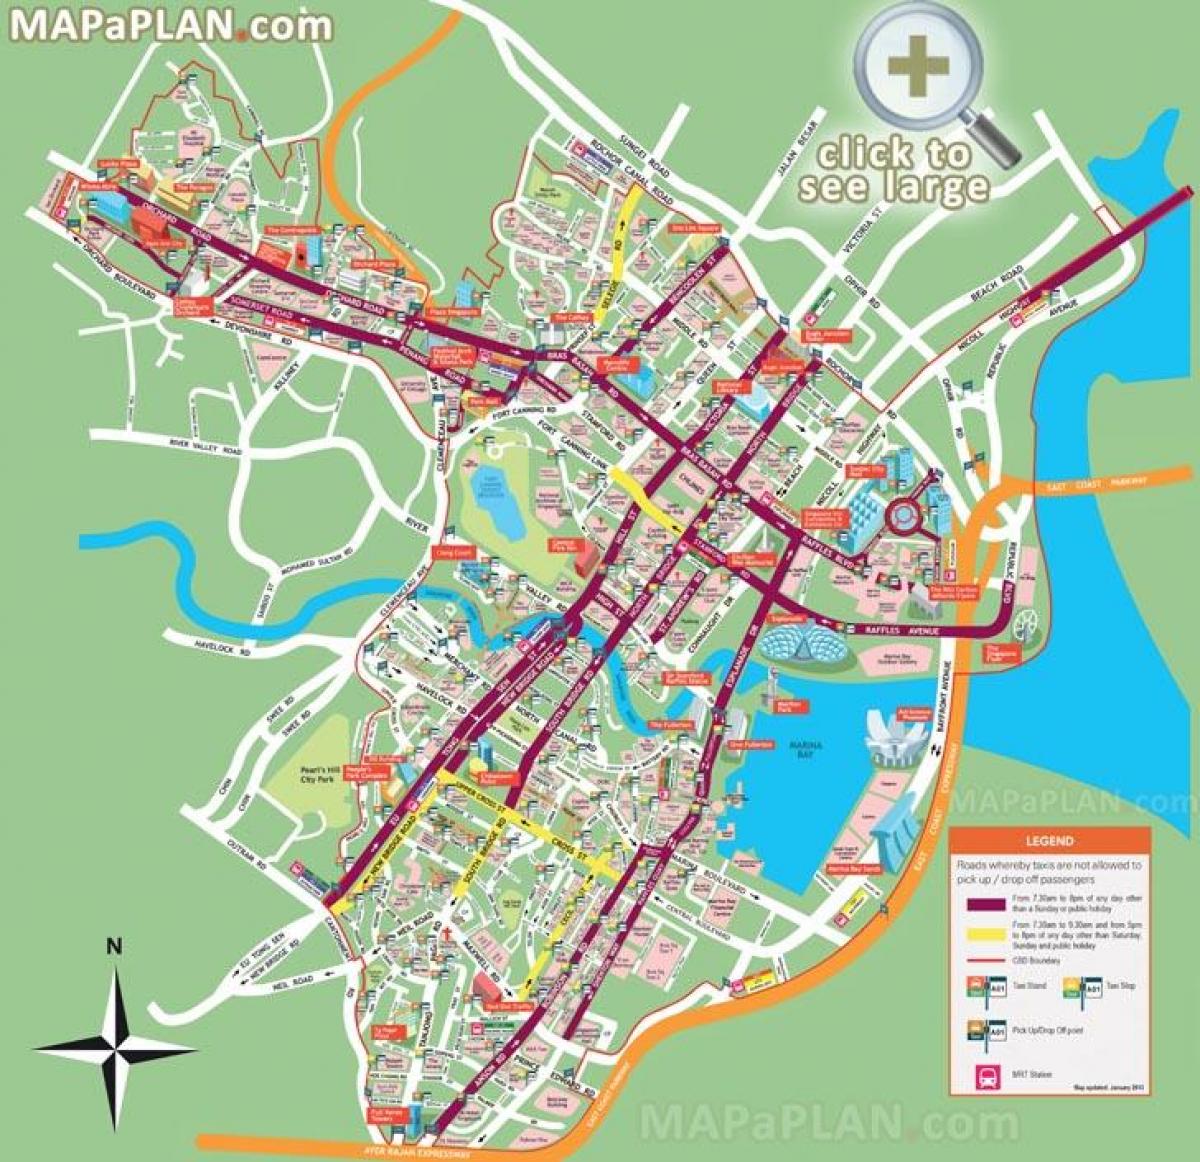 kaart Singapuris linn